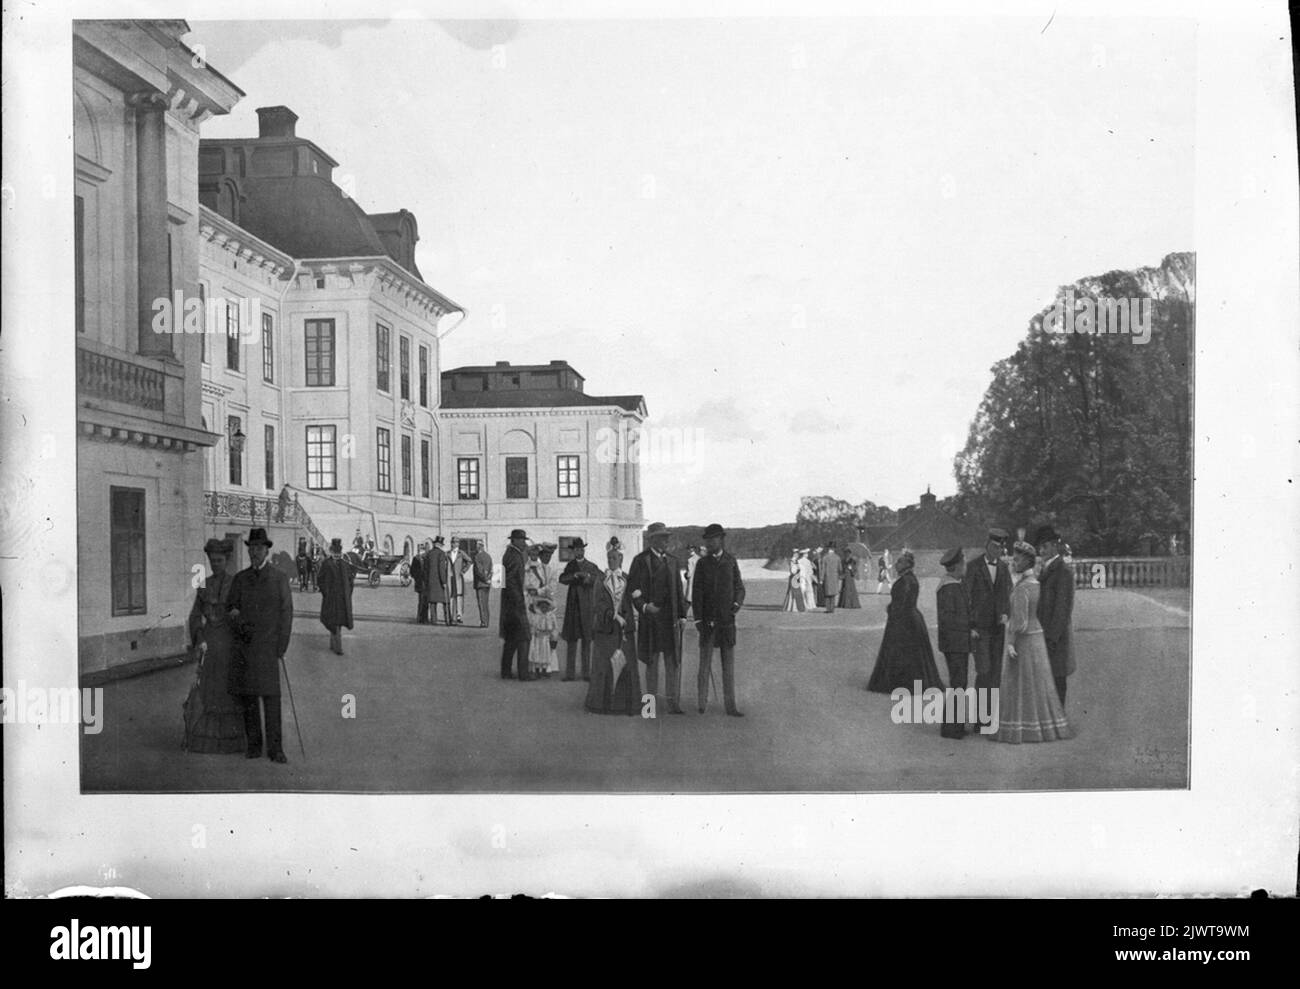 Persone al di fuori della costruzione del maniero. Människor utanför herrgårdsbyggnad. Foto Stock